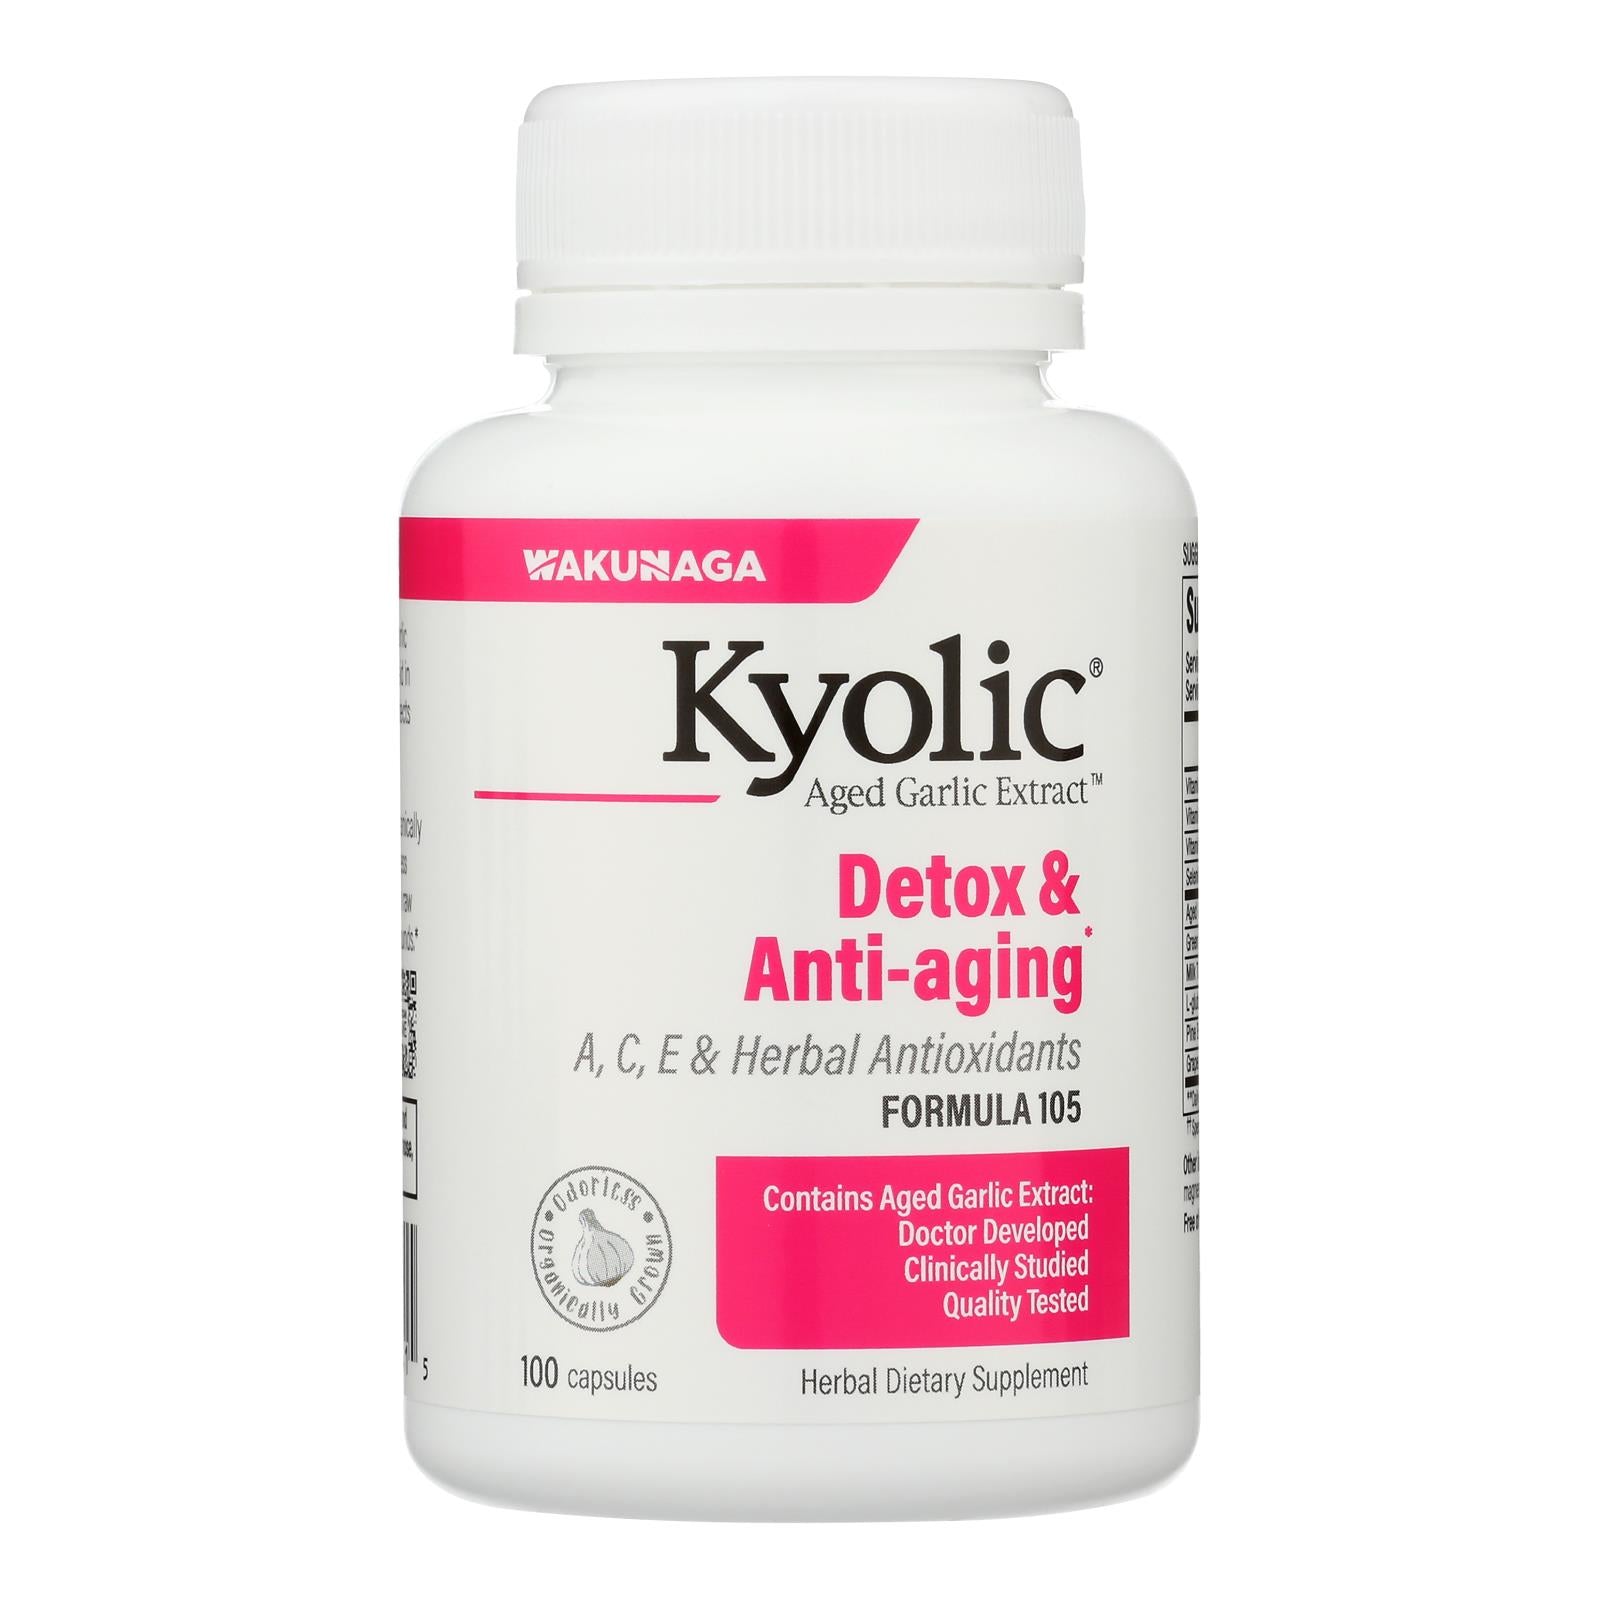 Kyolic - Aged Garlic Extract Detox And Anti-aging Formula 105 - 100 Capsules